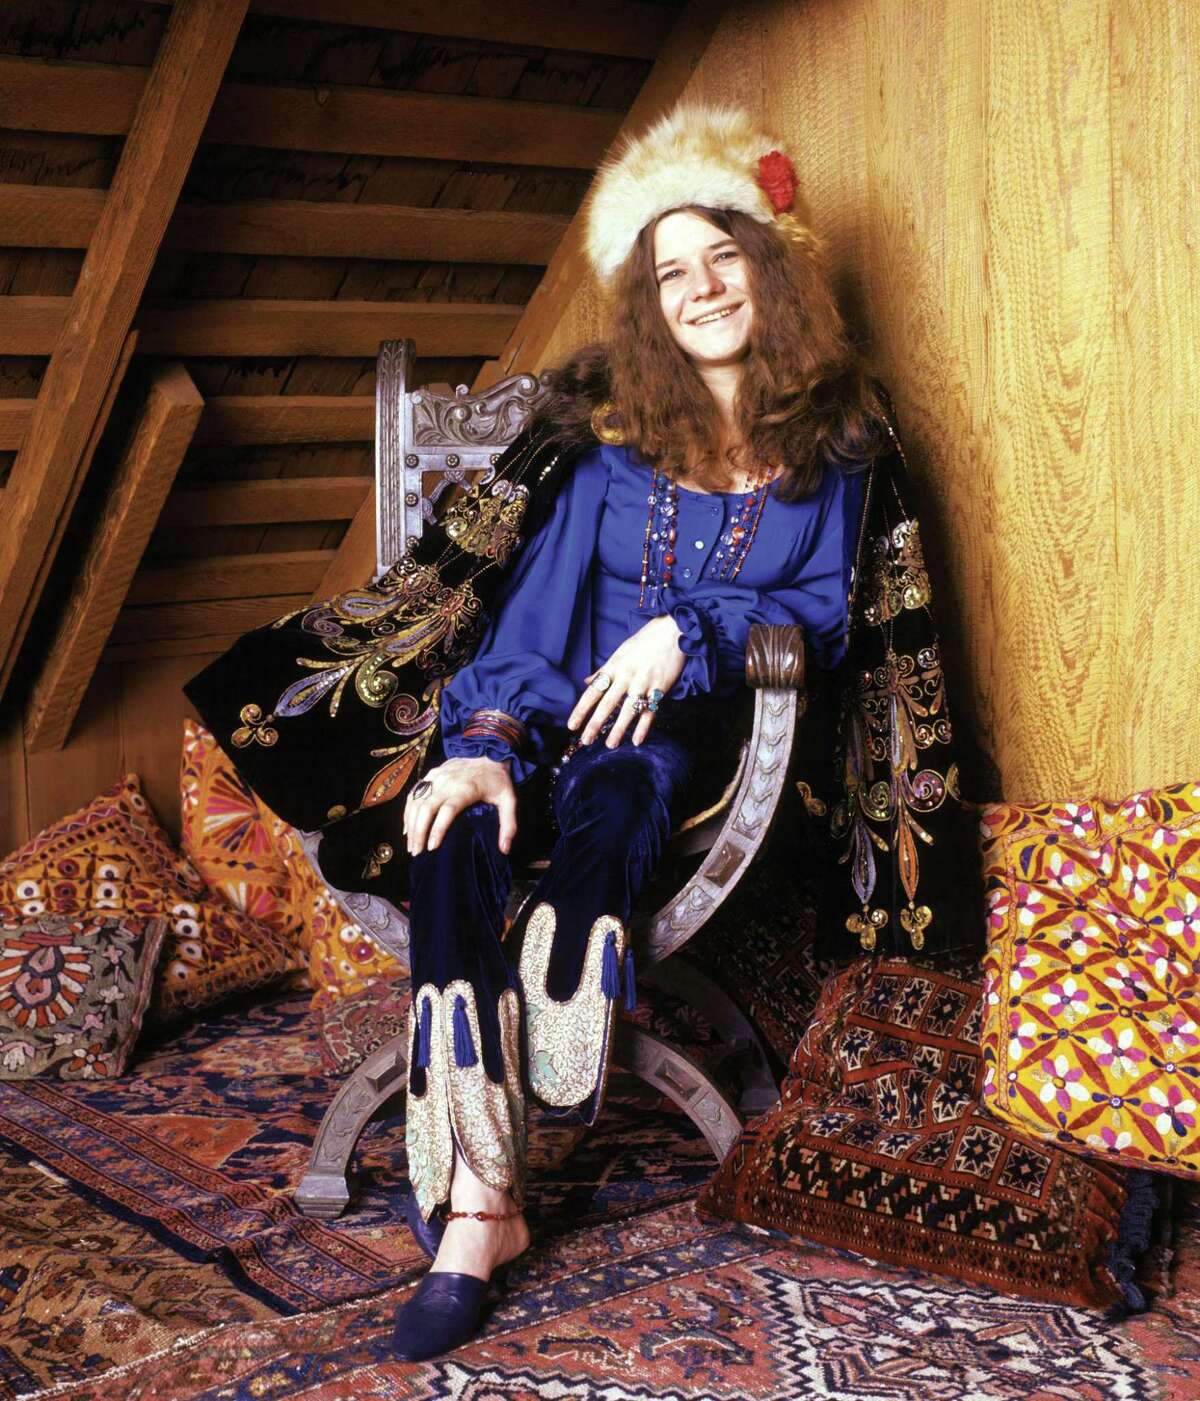 Janis Joplin at Spaulding Taylor's house in San Francisco